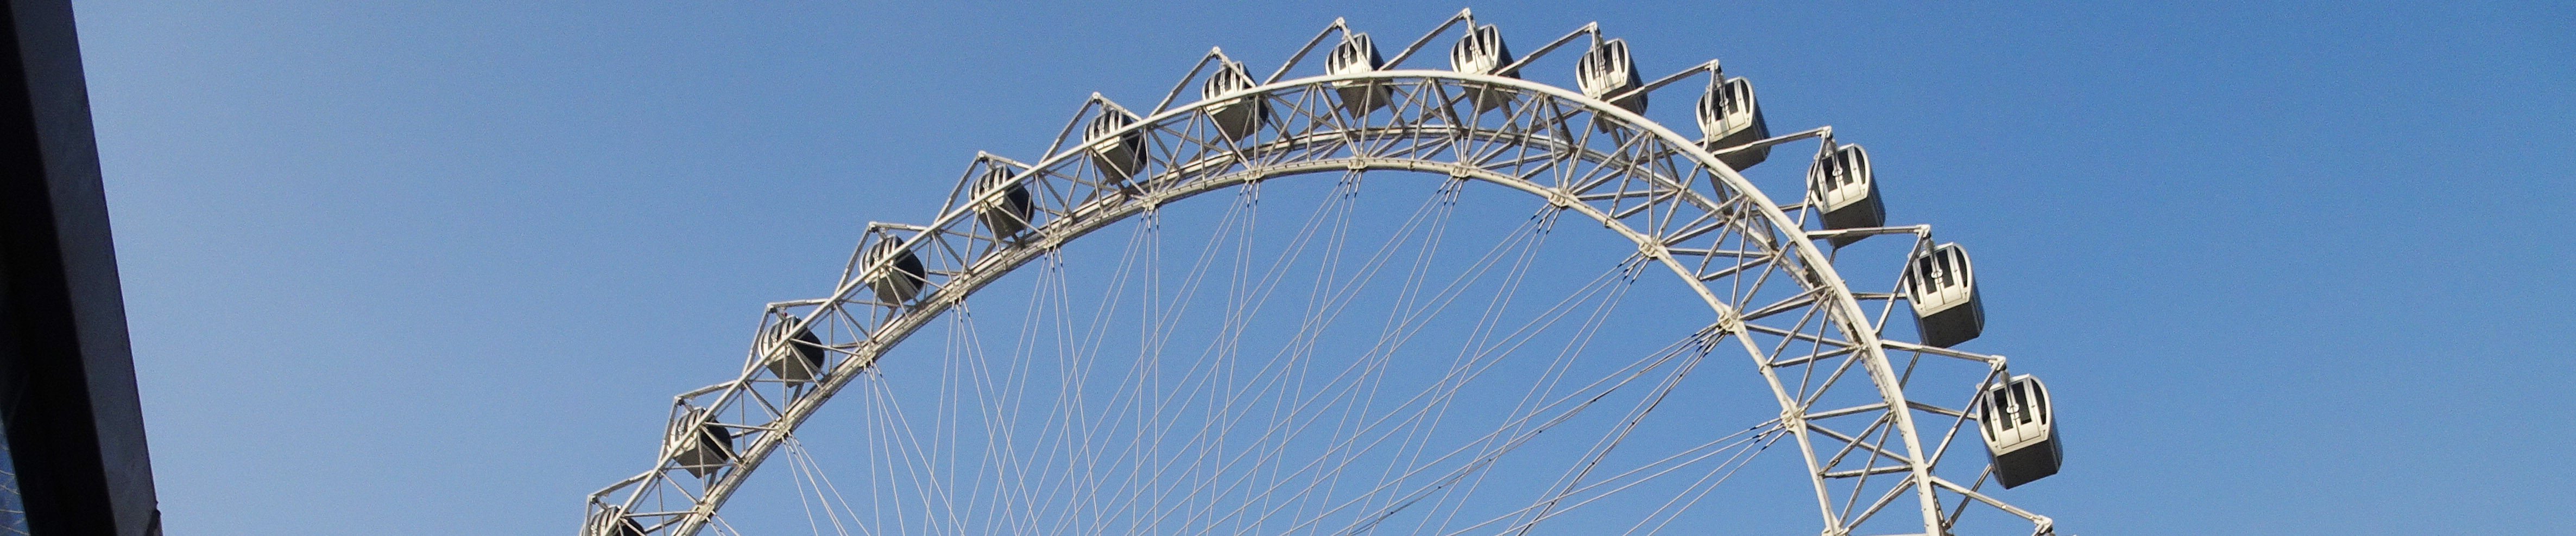 Ferris wheel 60m by Jinma Rides_Golden Horse